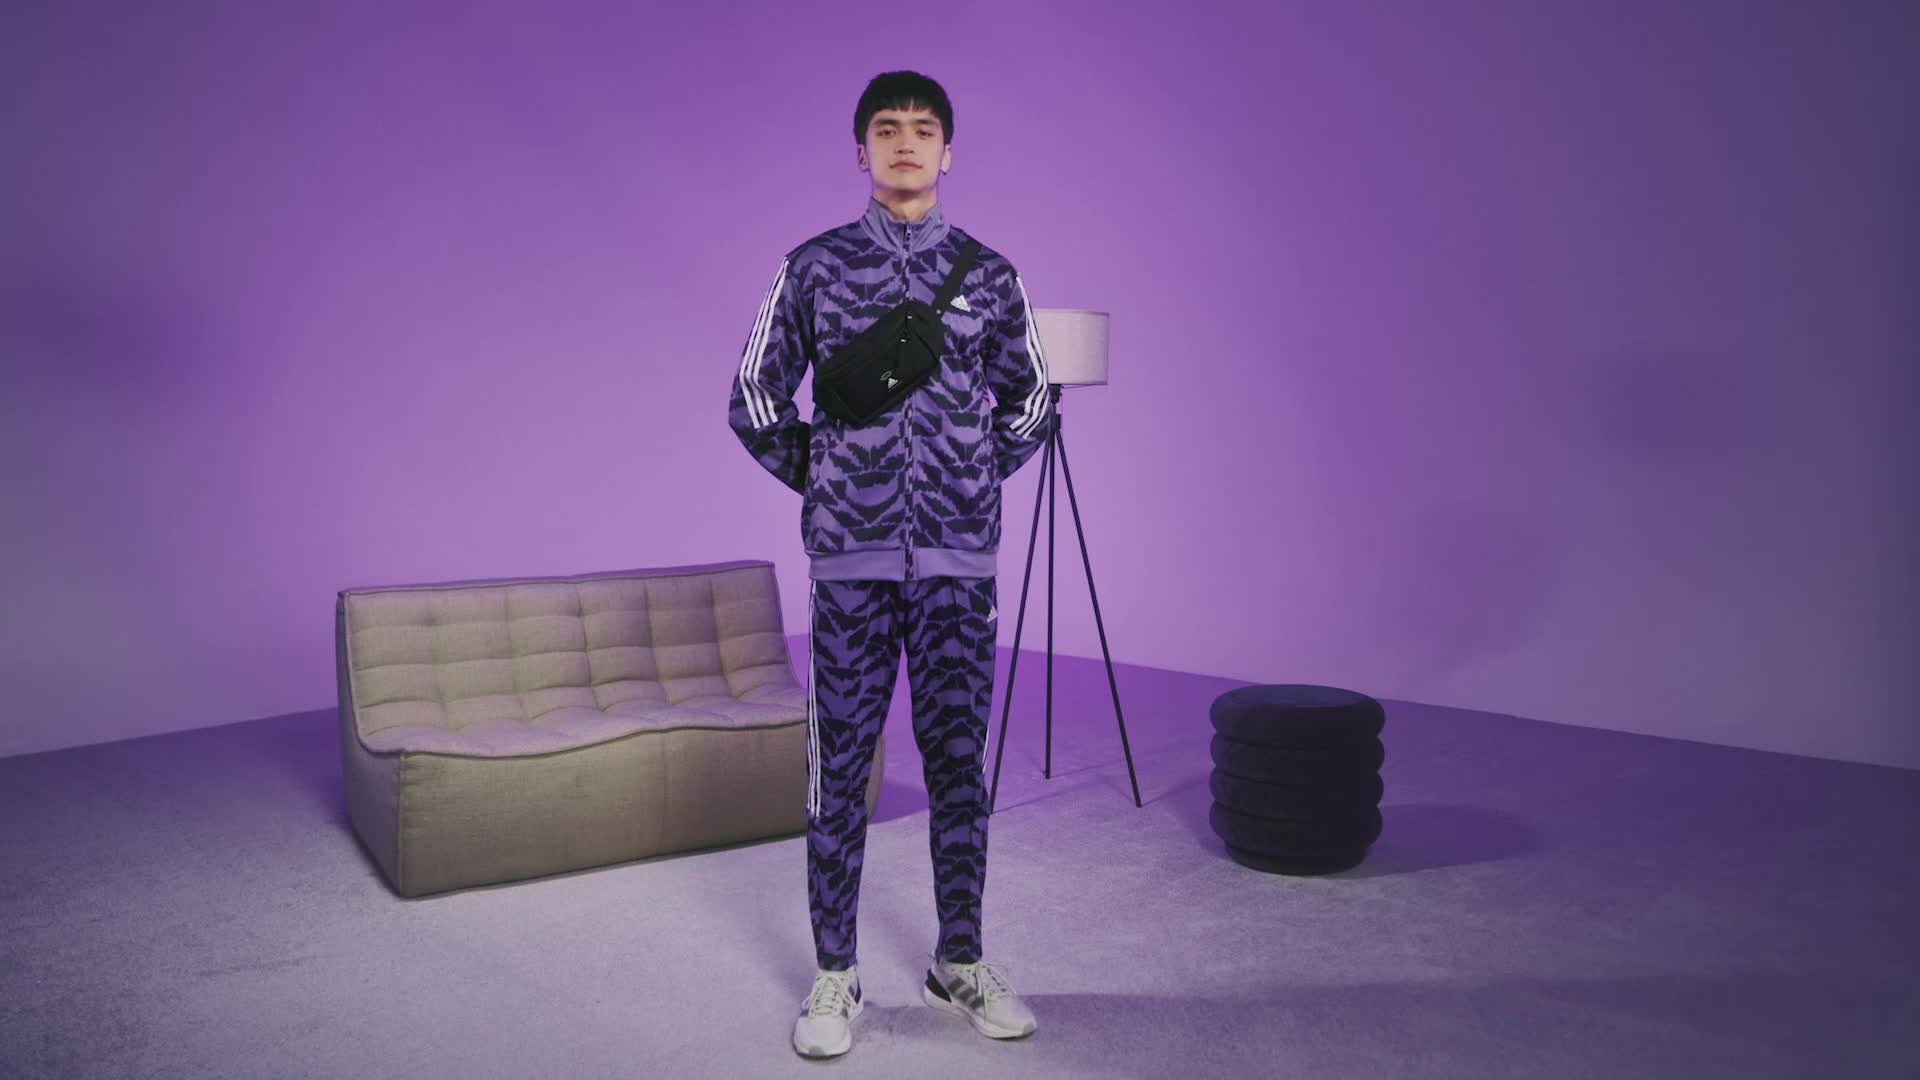 adidas Tiro Suit Up Track Jacket - Purple | Men\'s Lifestyle | adidas US